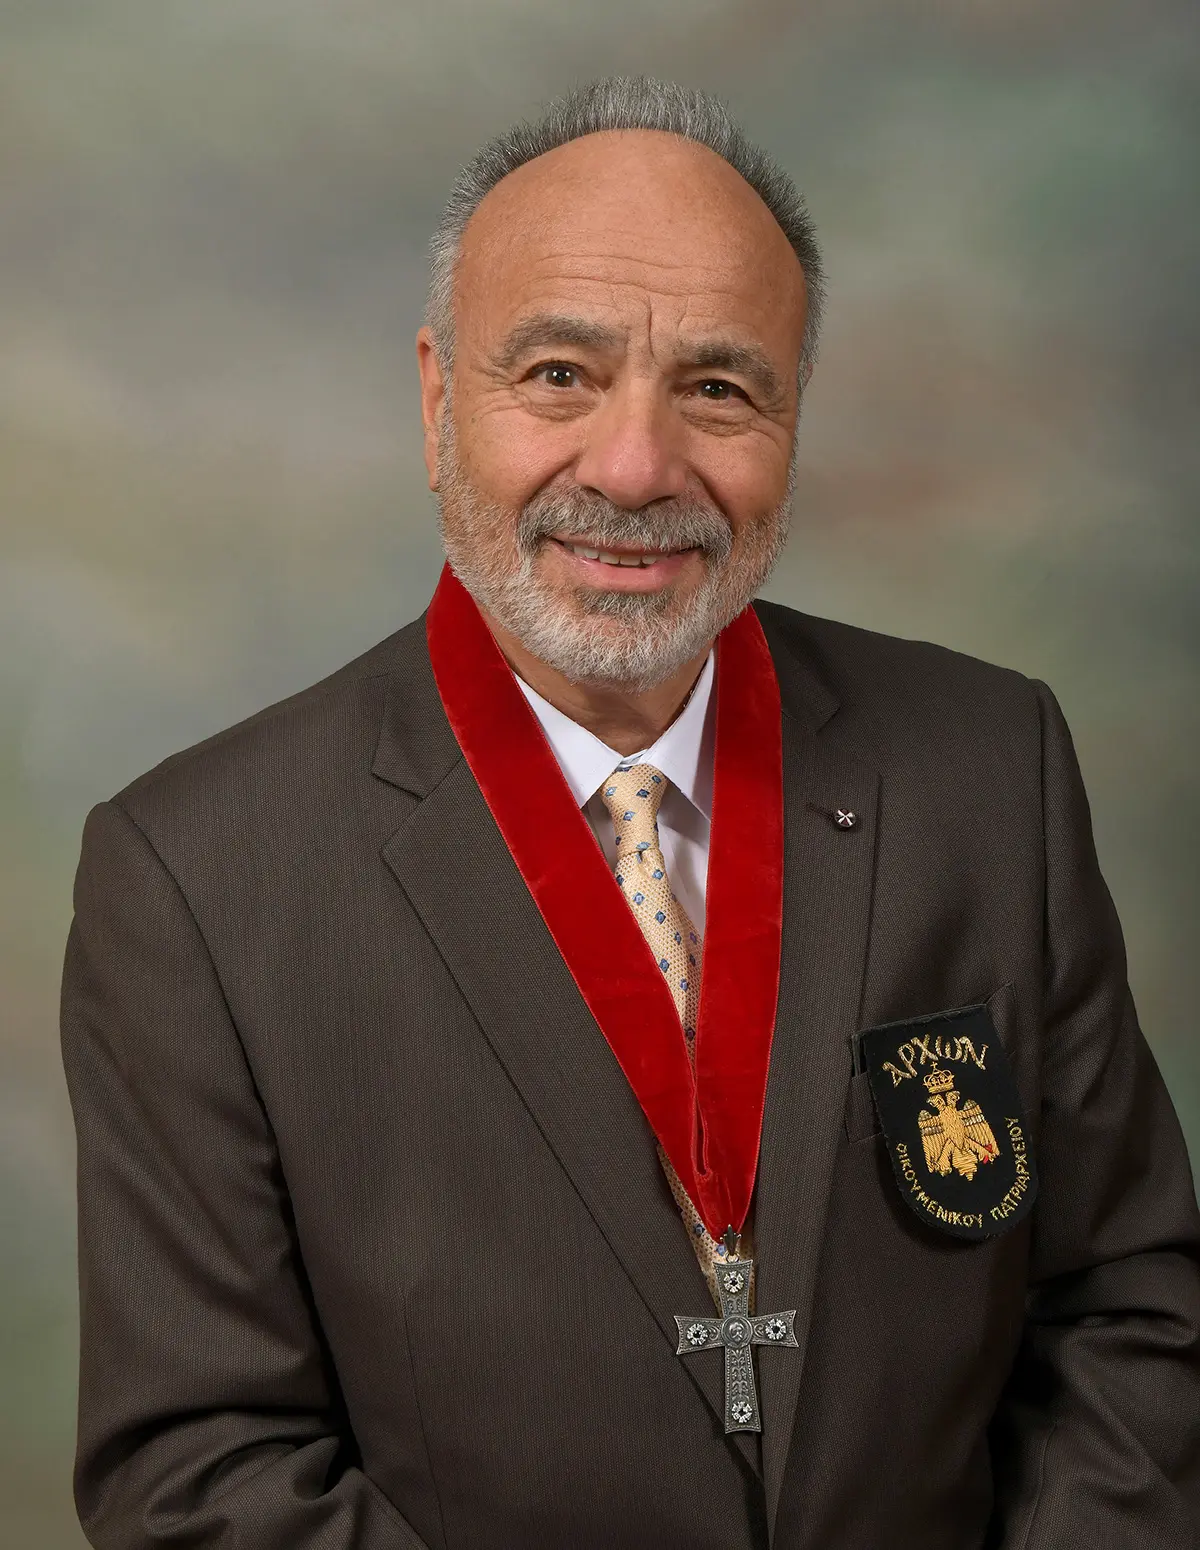 Gus Pablecas